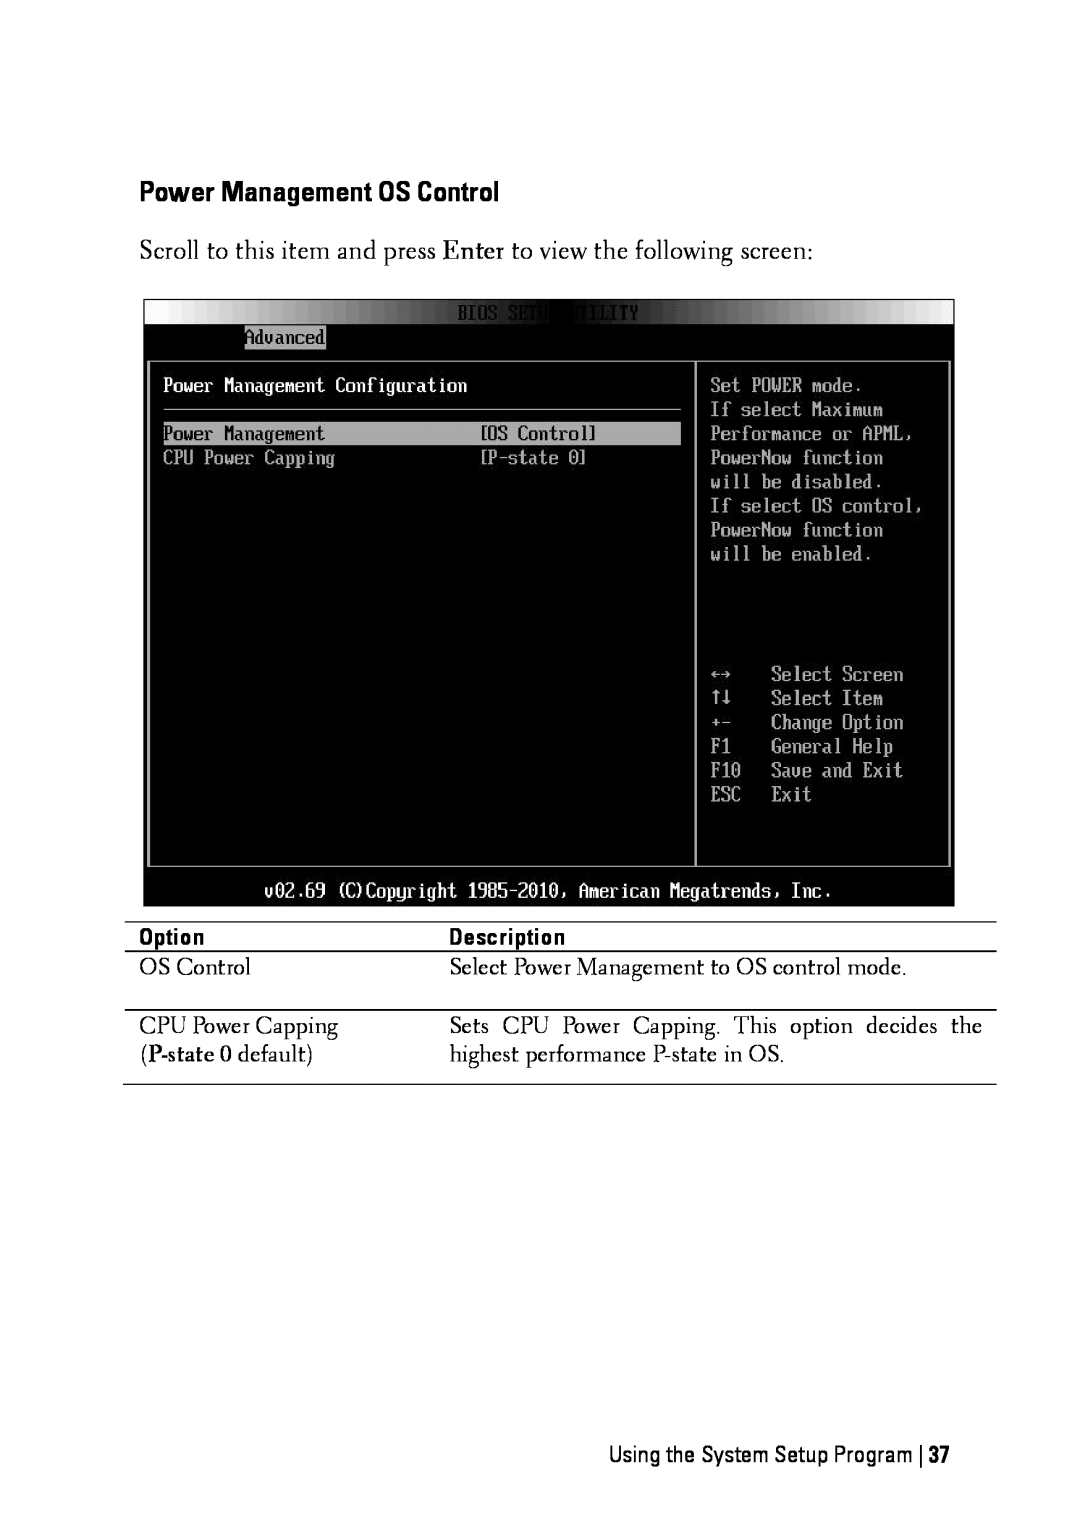 Dell C6145 manual Power Management OS Control, Option, Description, P-state 0 default, Using the System Setup Program 